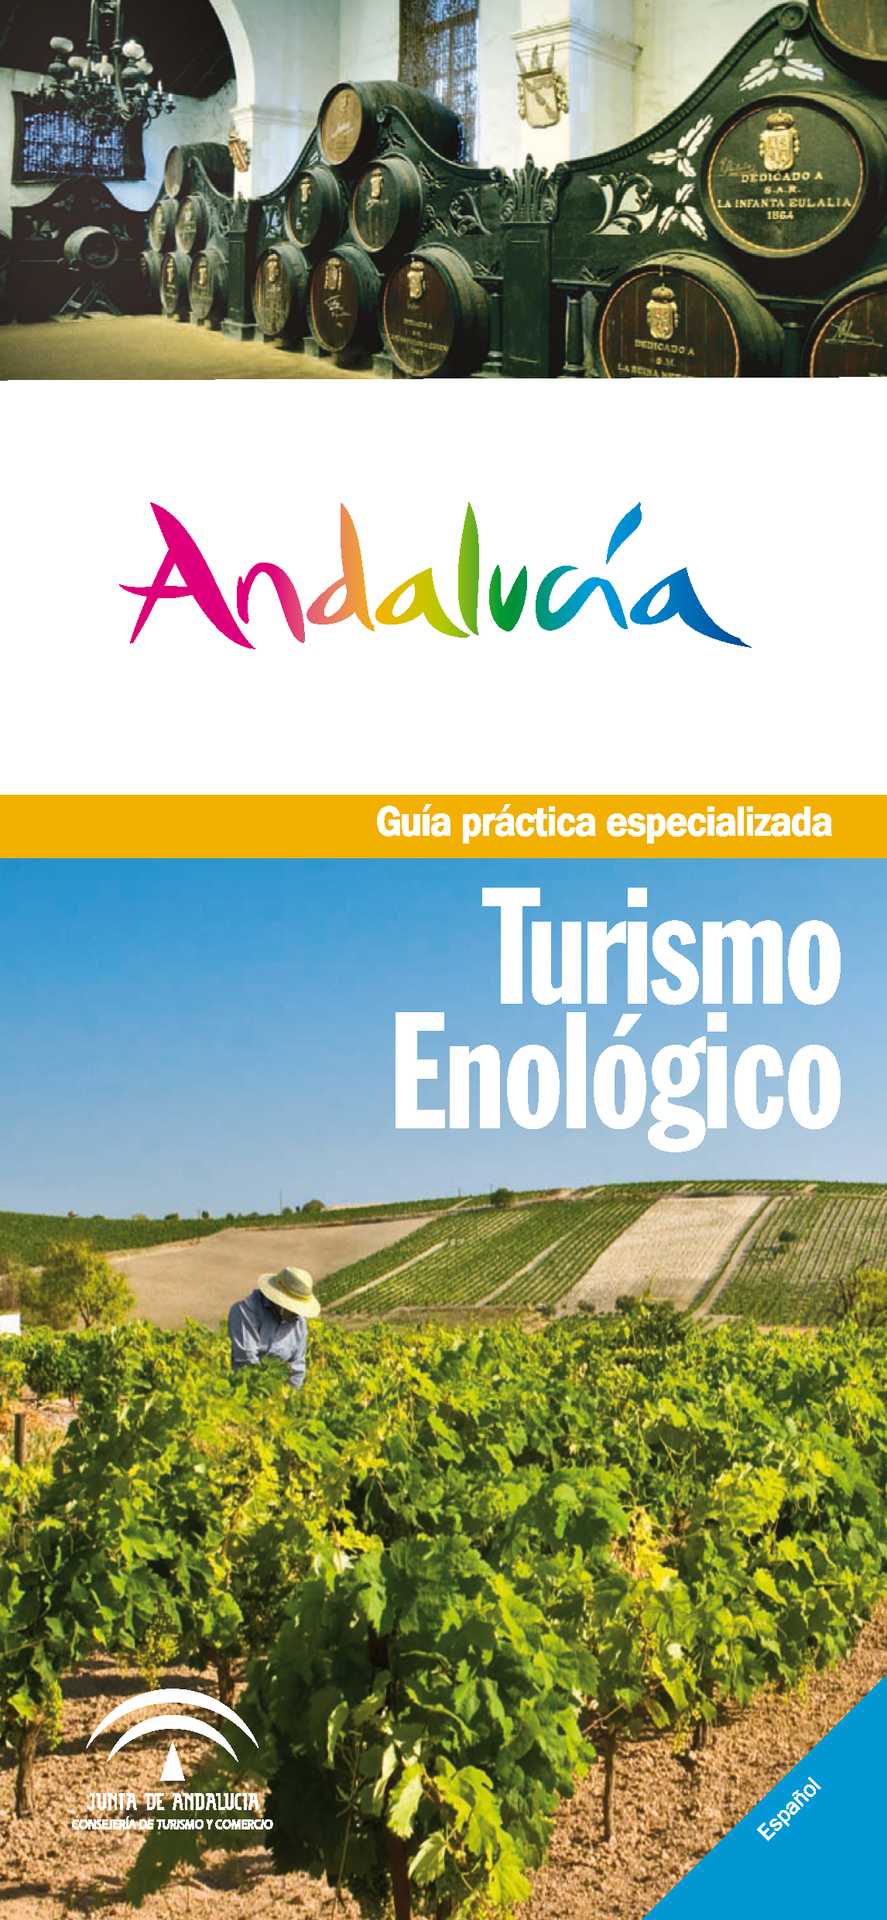 guia_practica_turismo_enologico.png 